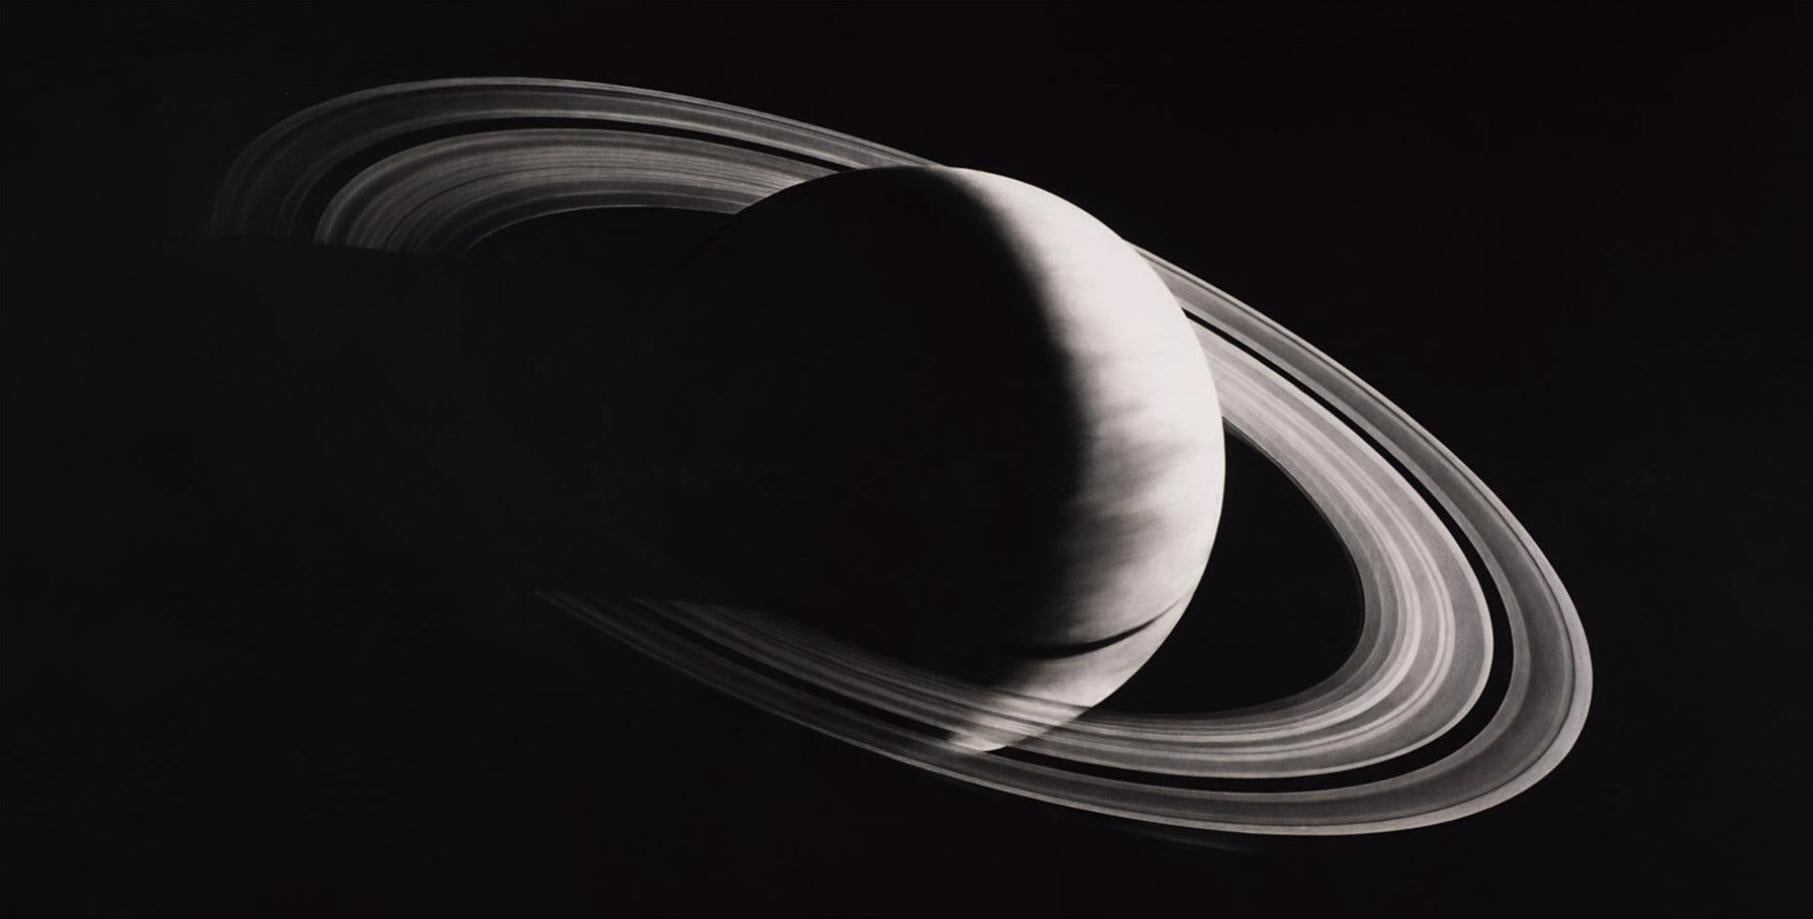 Robert Longo Abstract Print - Untitled (Saturn)